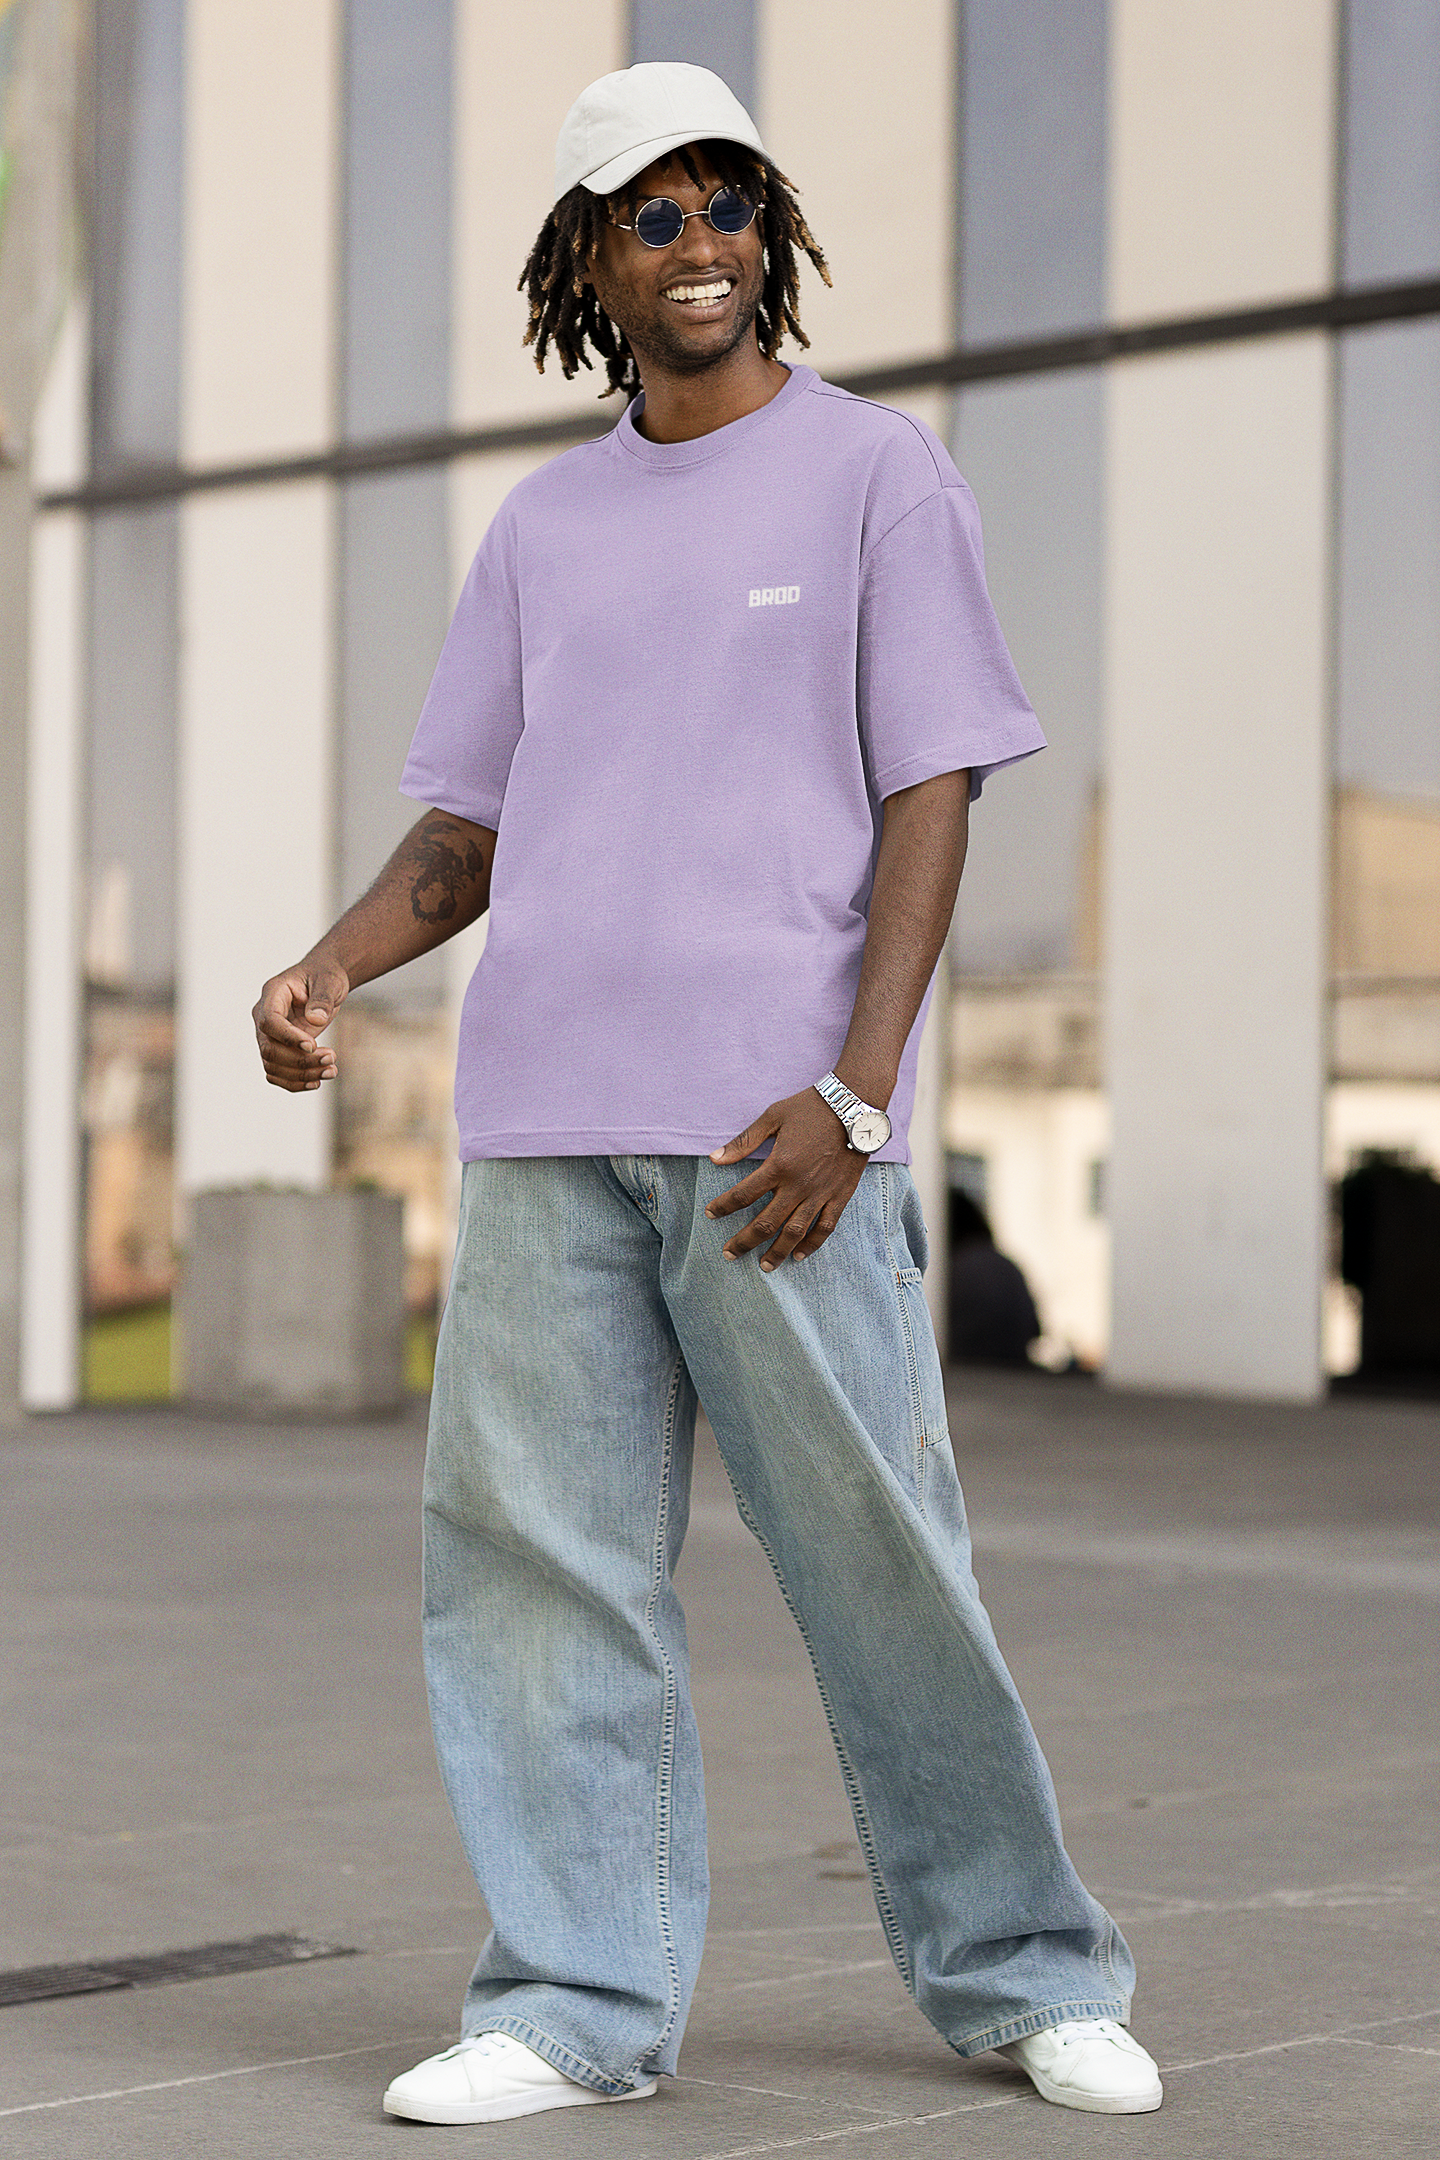 Brod Purple Streetwear – The Brod